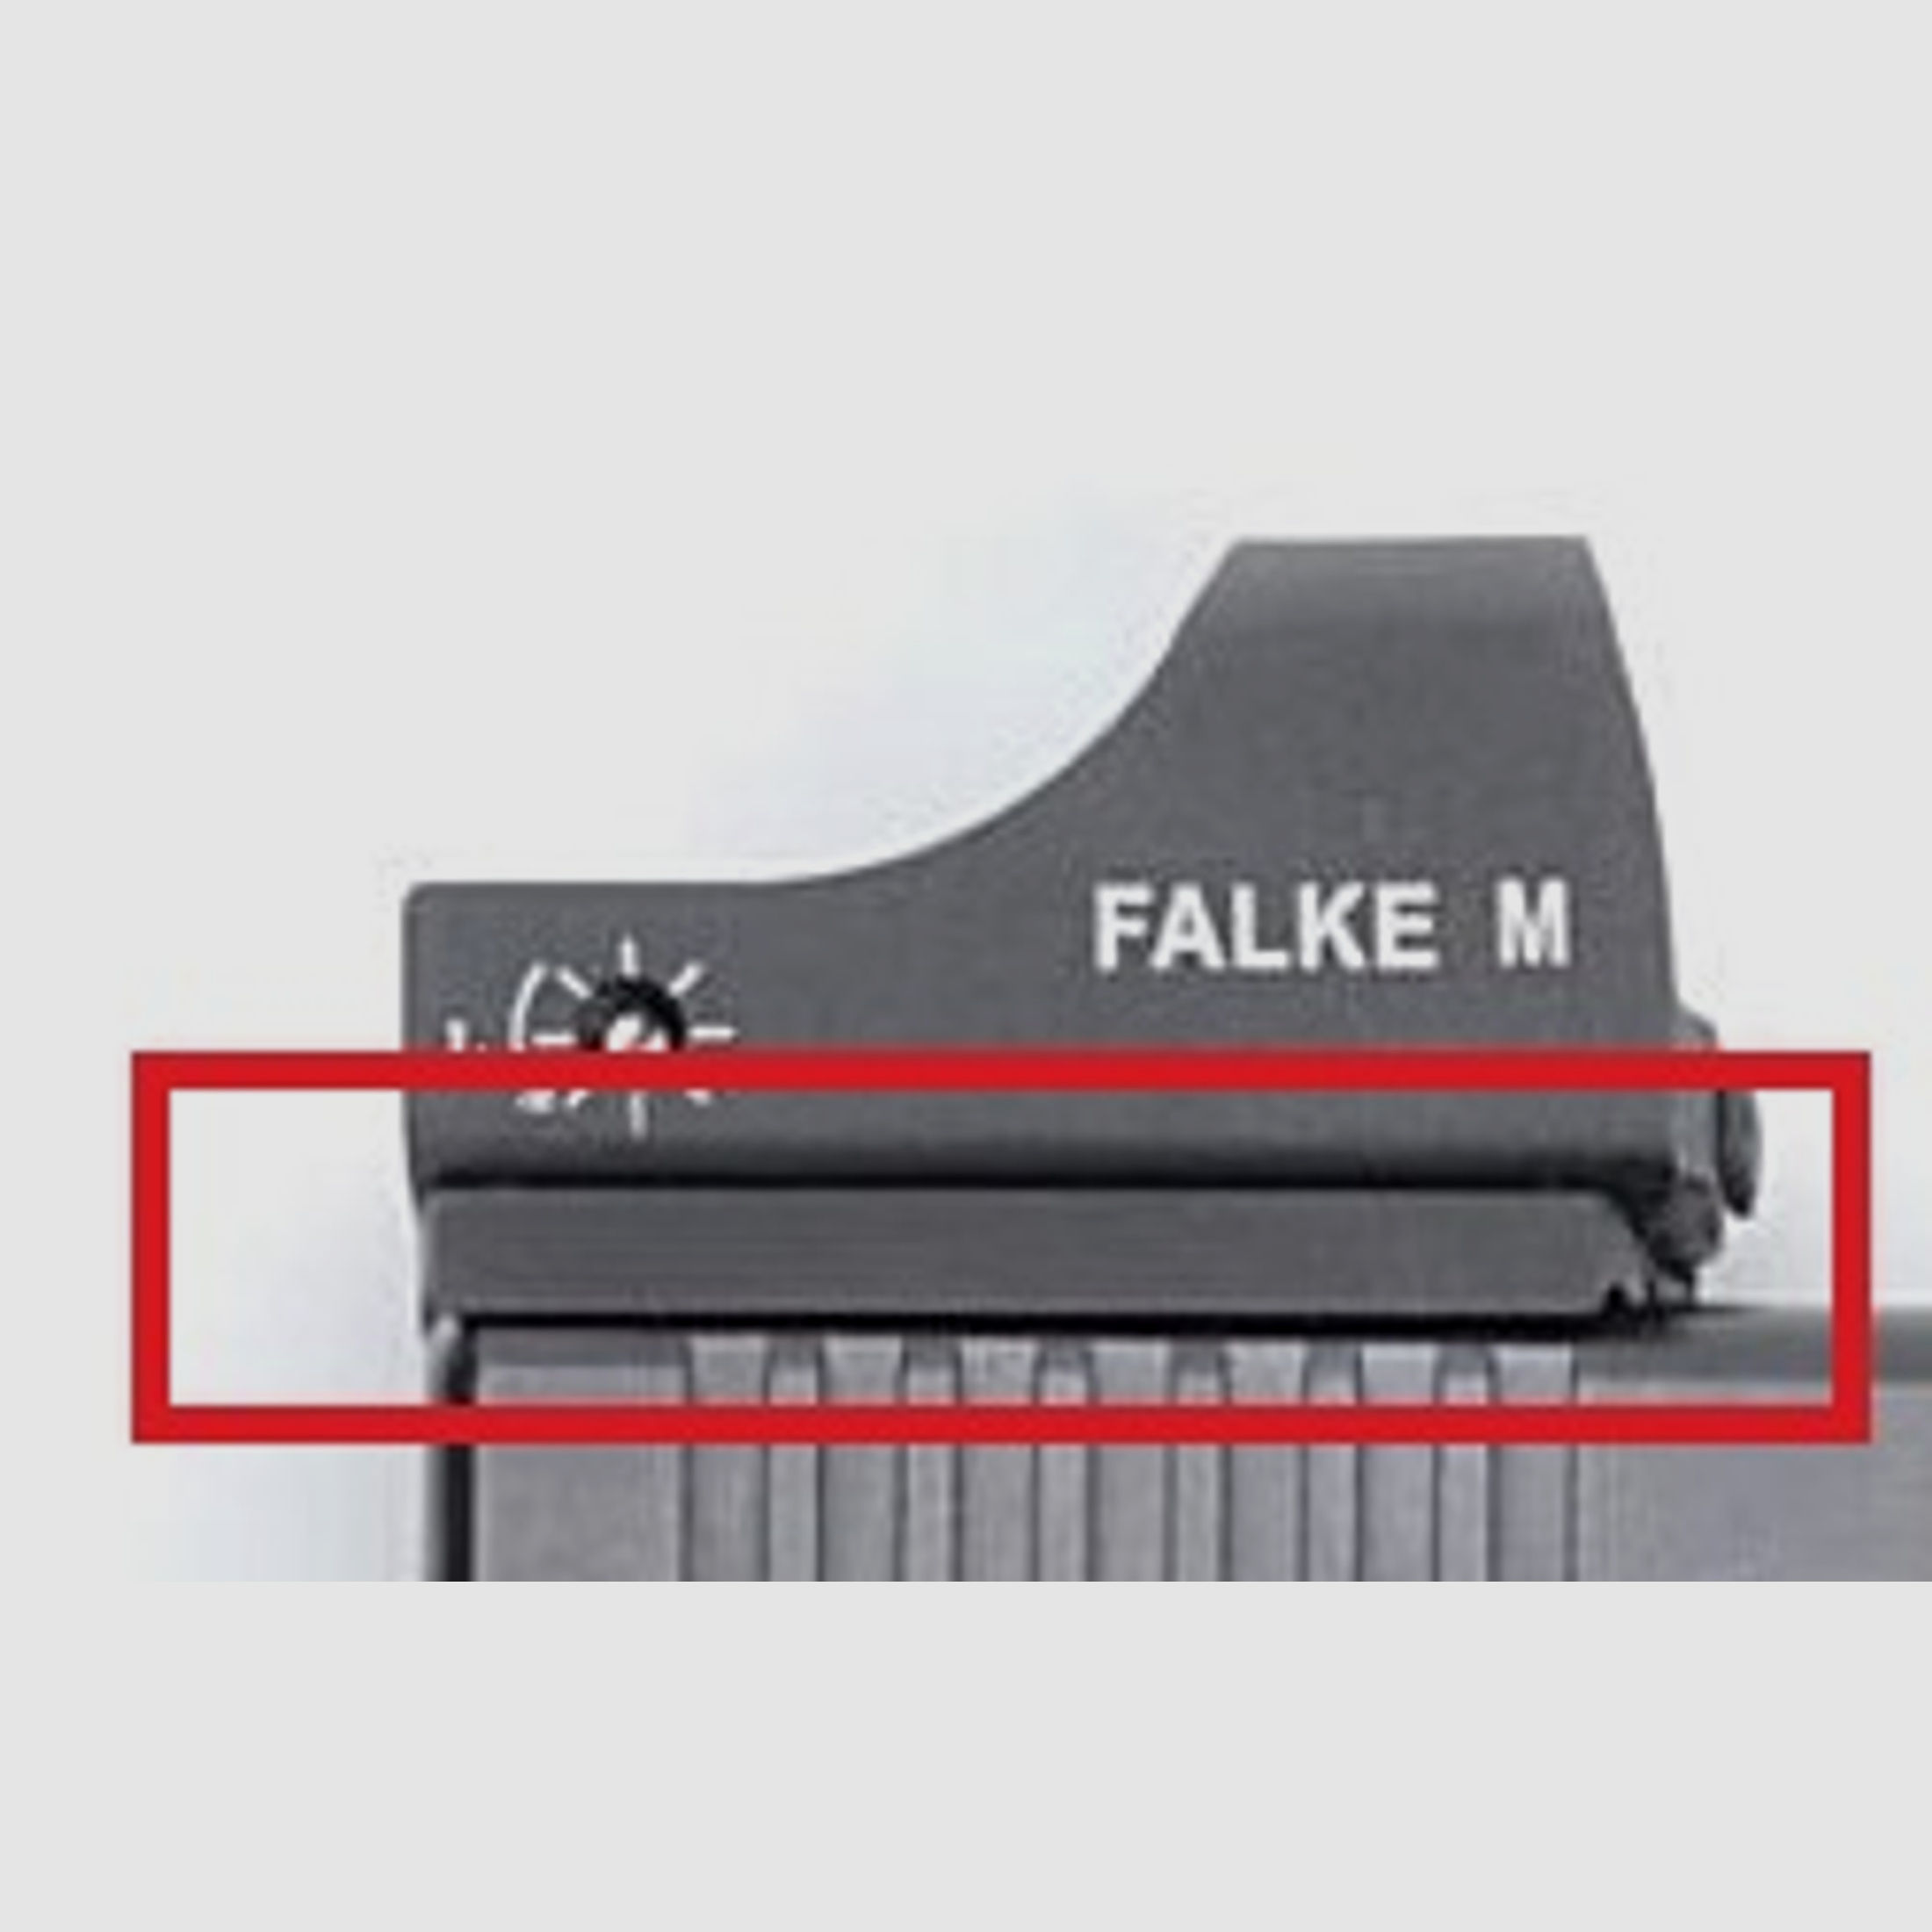 FALKE Optik Montage f. Leuchtpunktvisier Montageplatte Falke M f. Weaverschiene